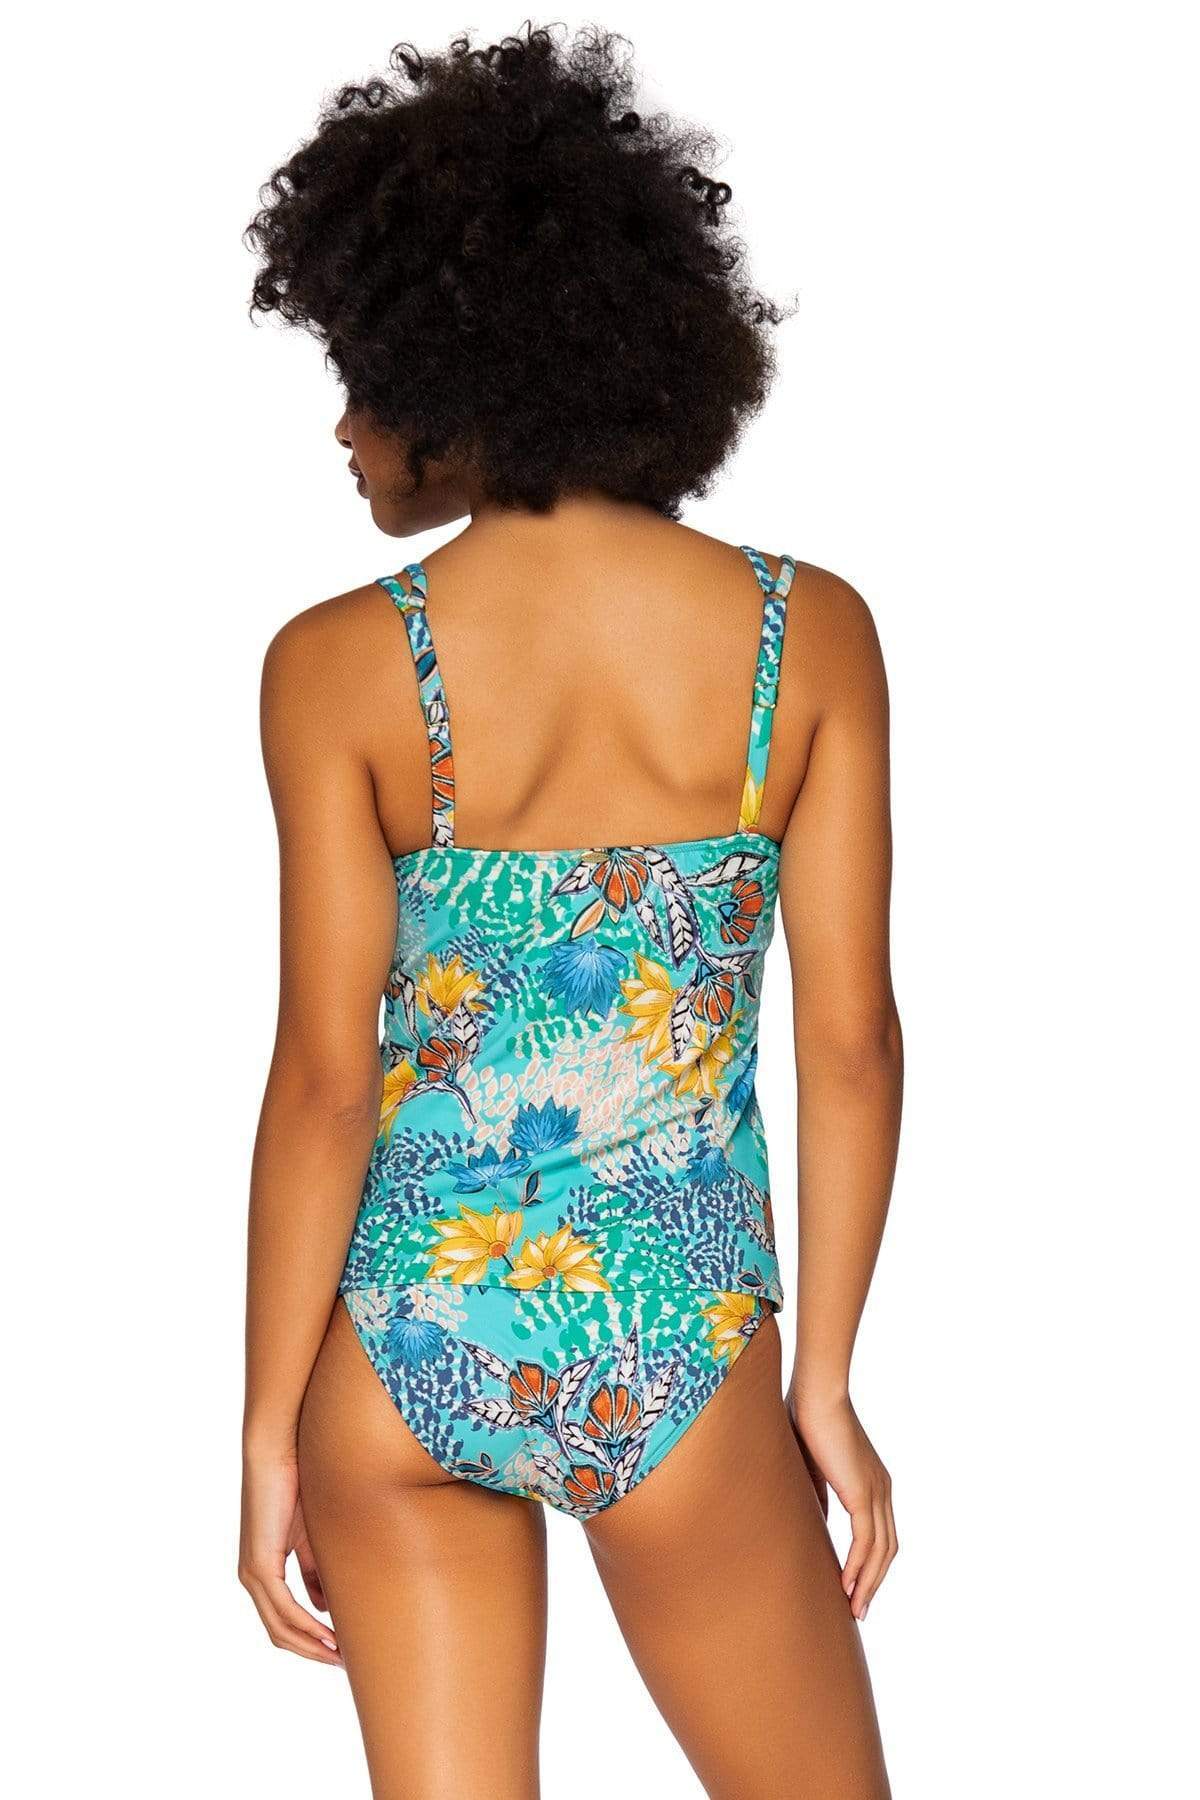 Bestswimwear -  Sunsets Aqua Reef Taylor Tankini